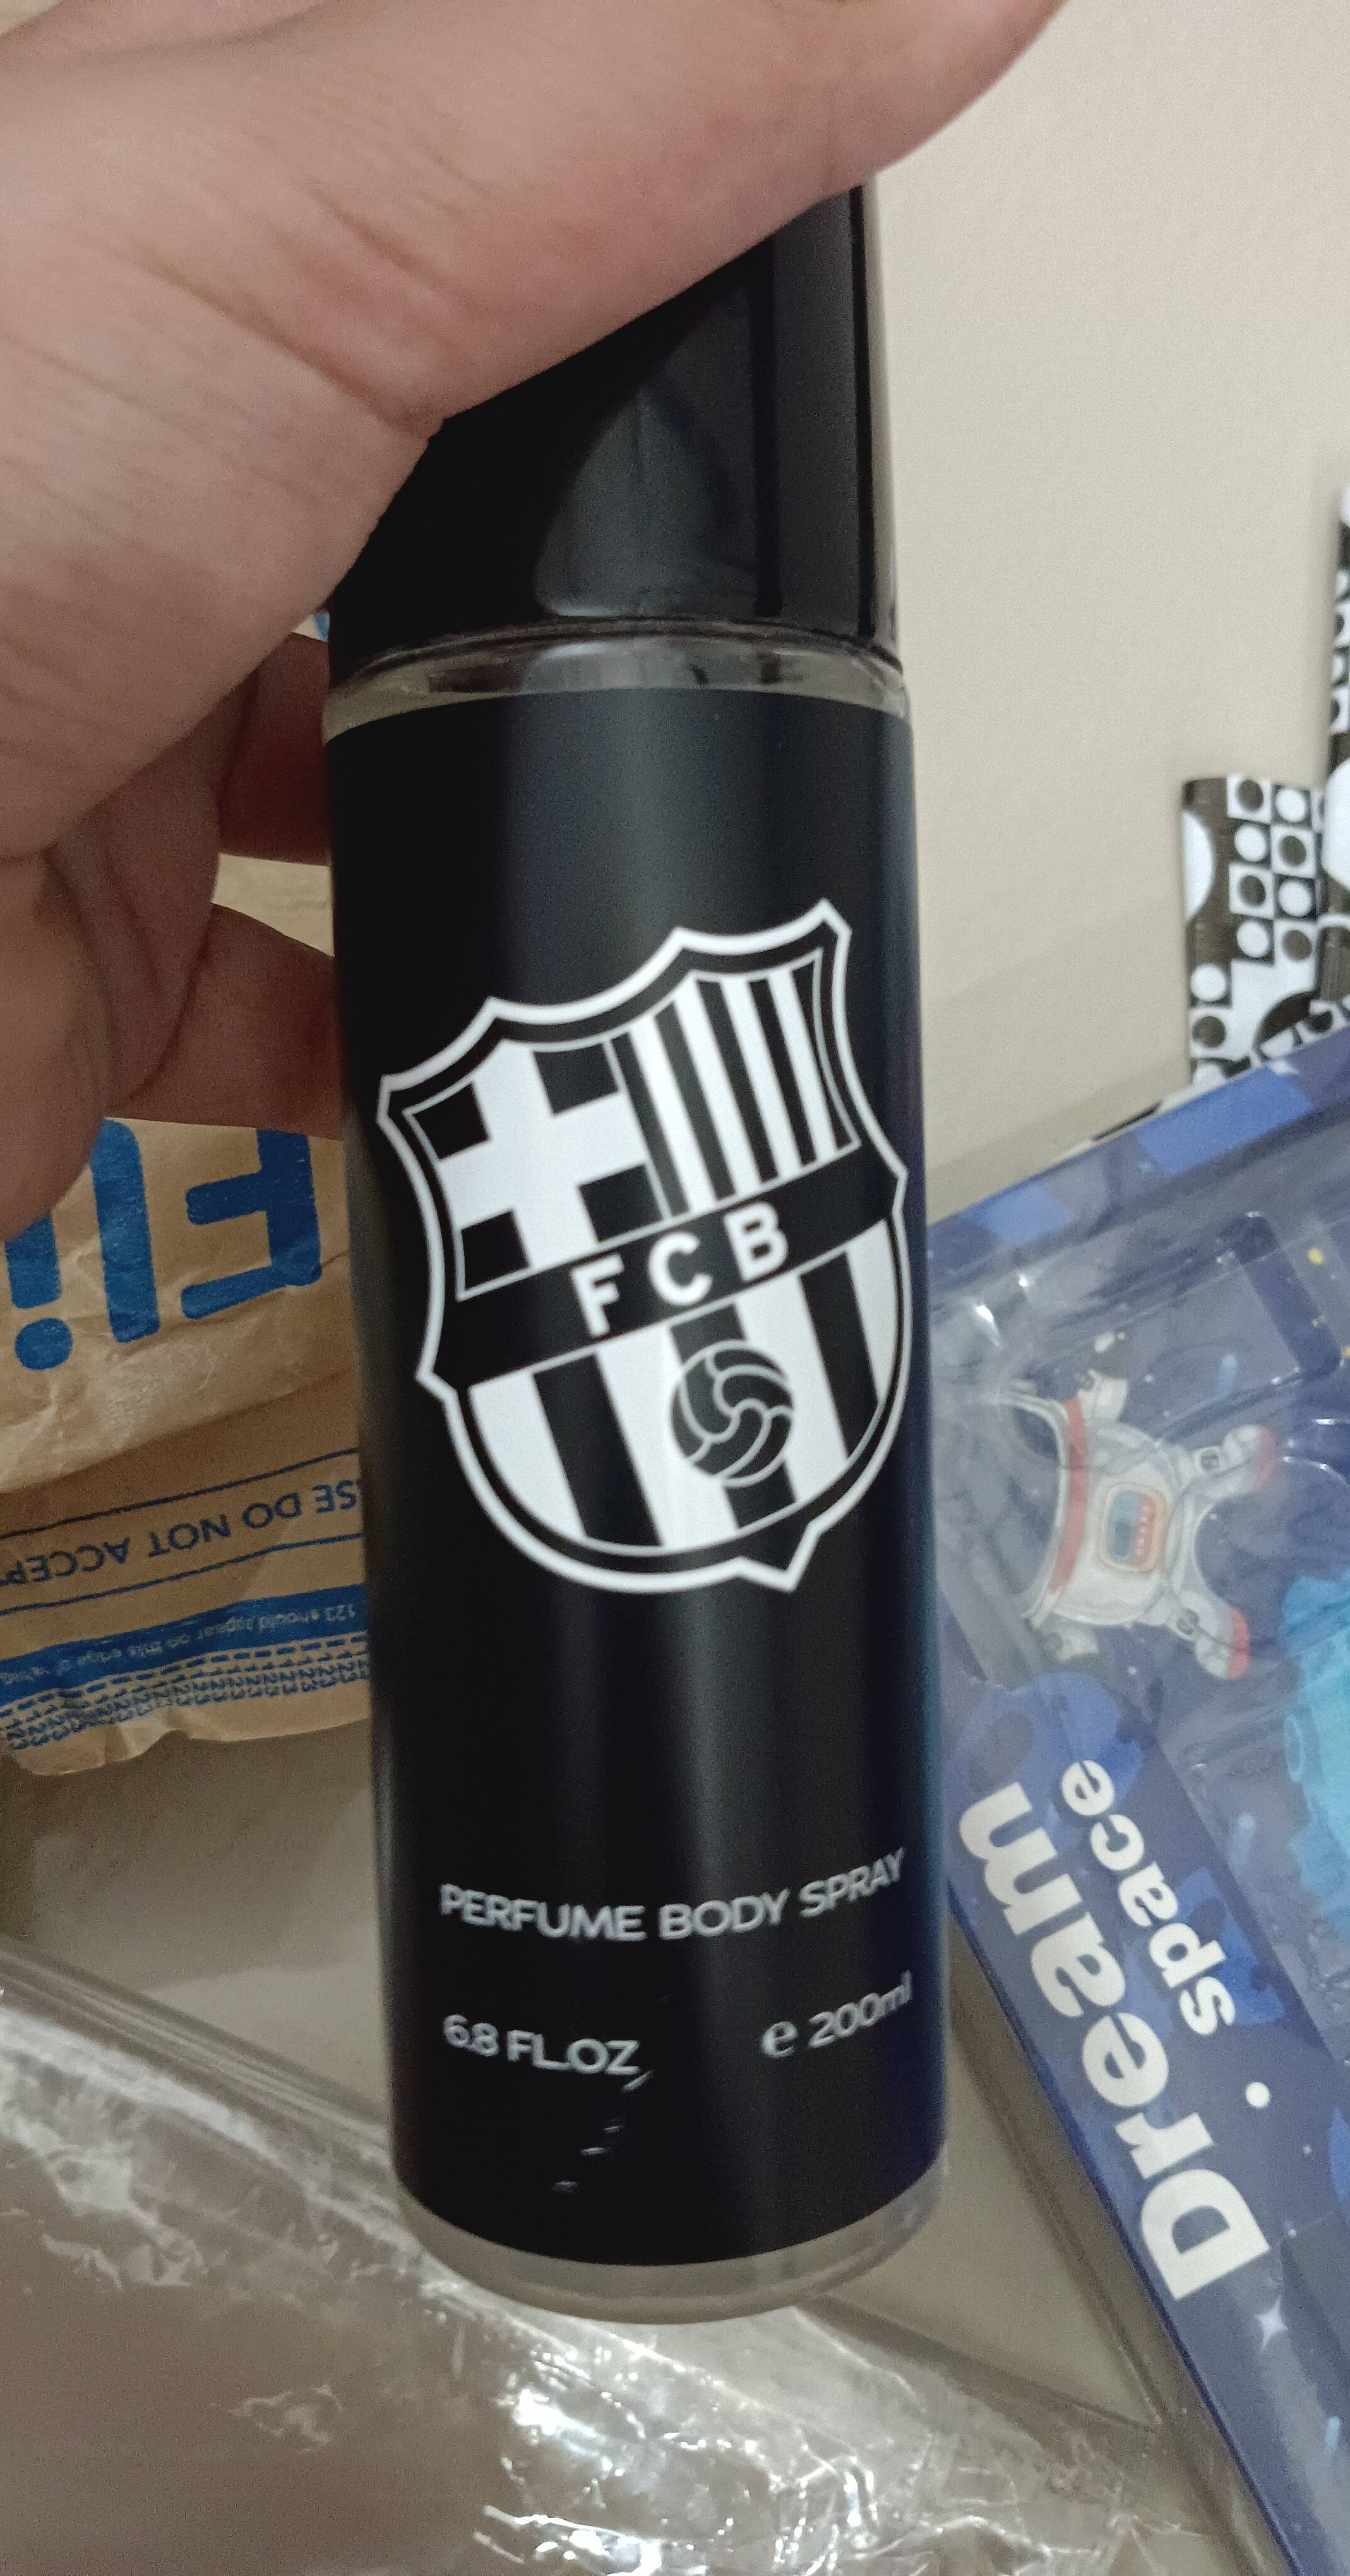 FCB perfume body spray - Product - en